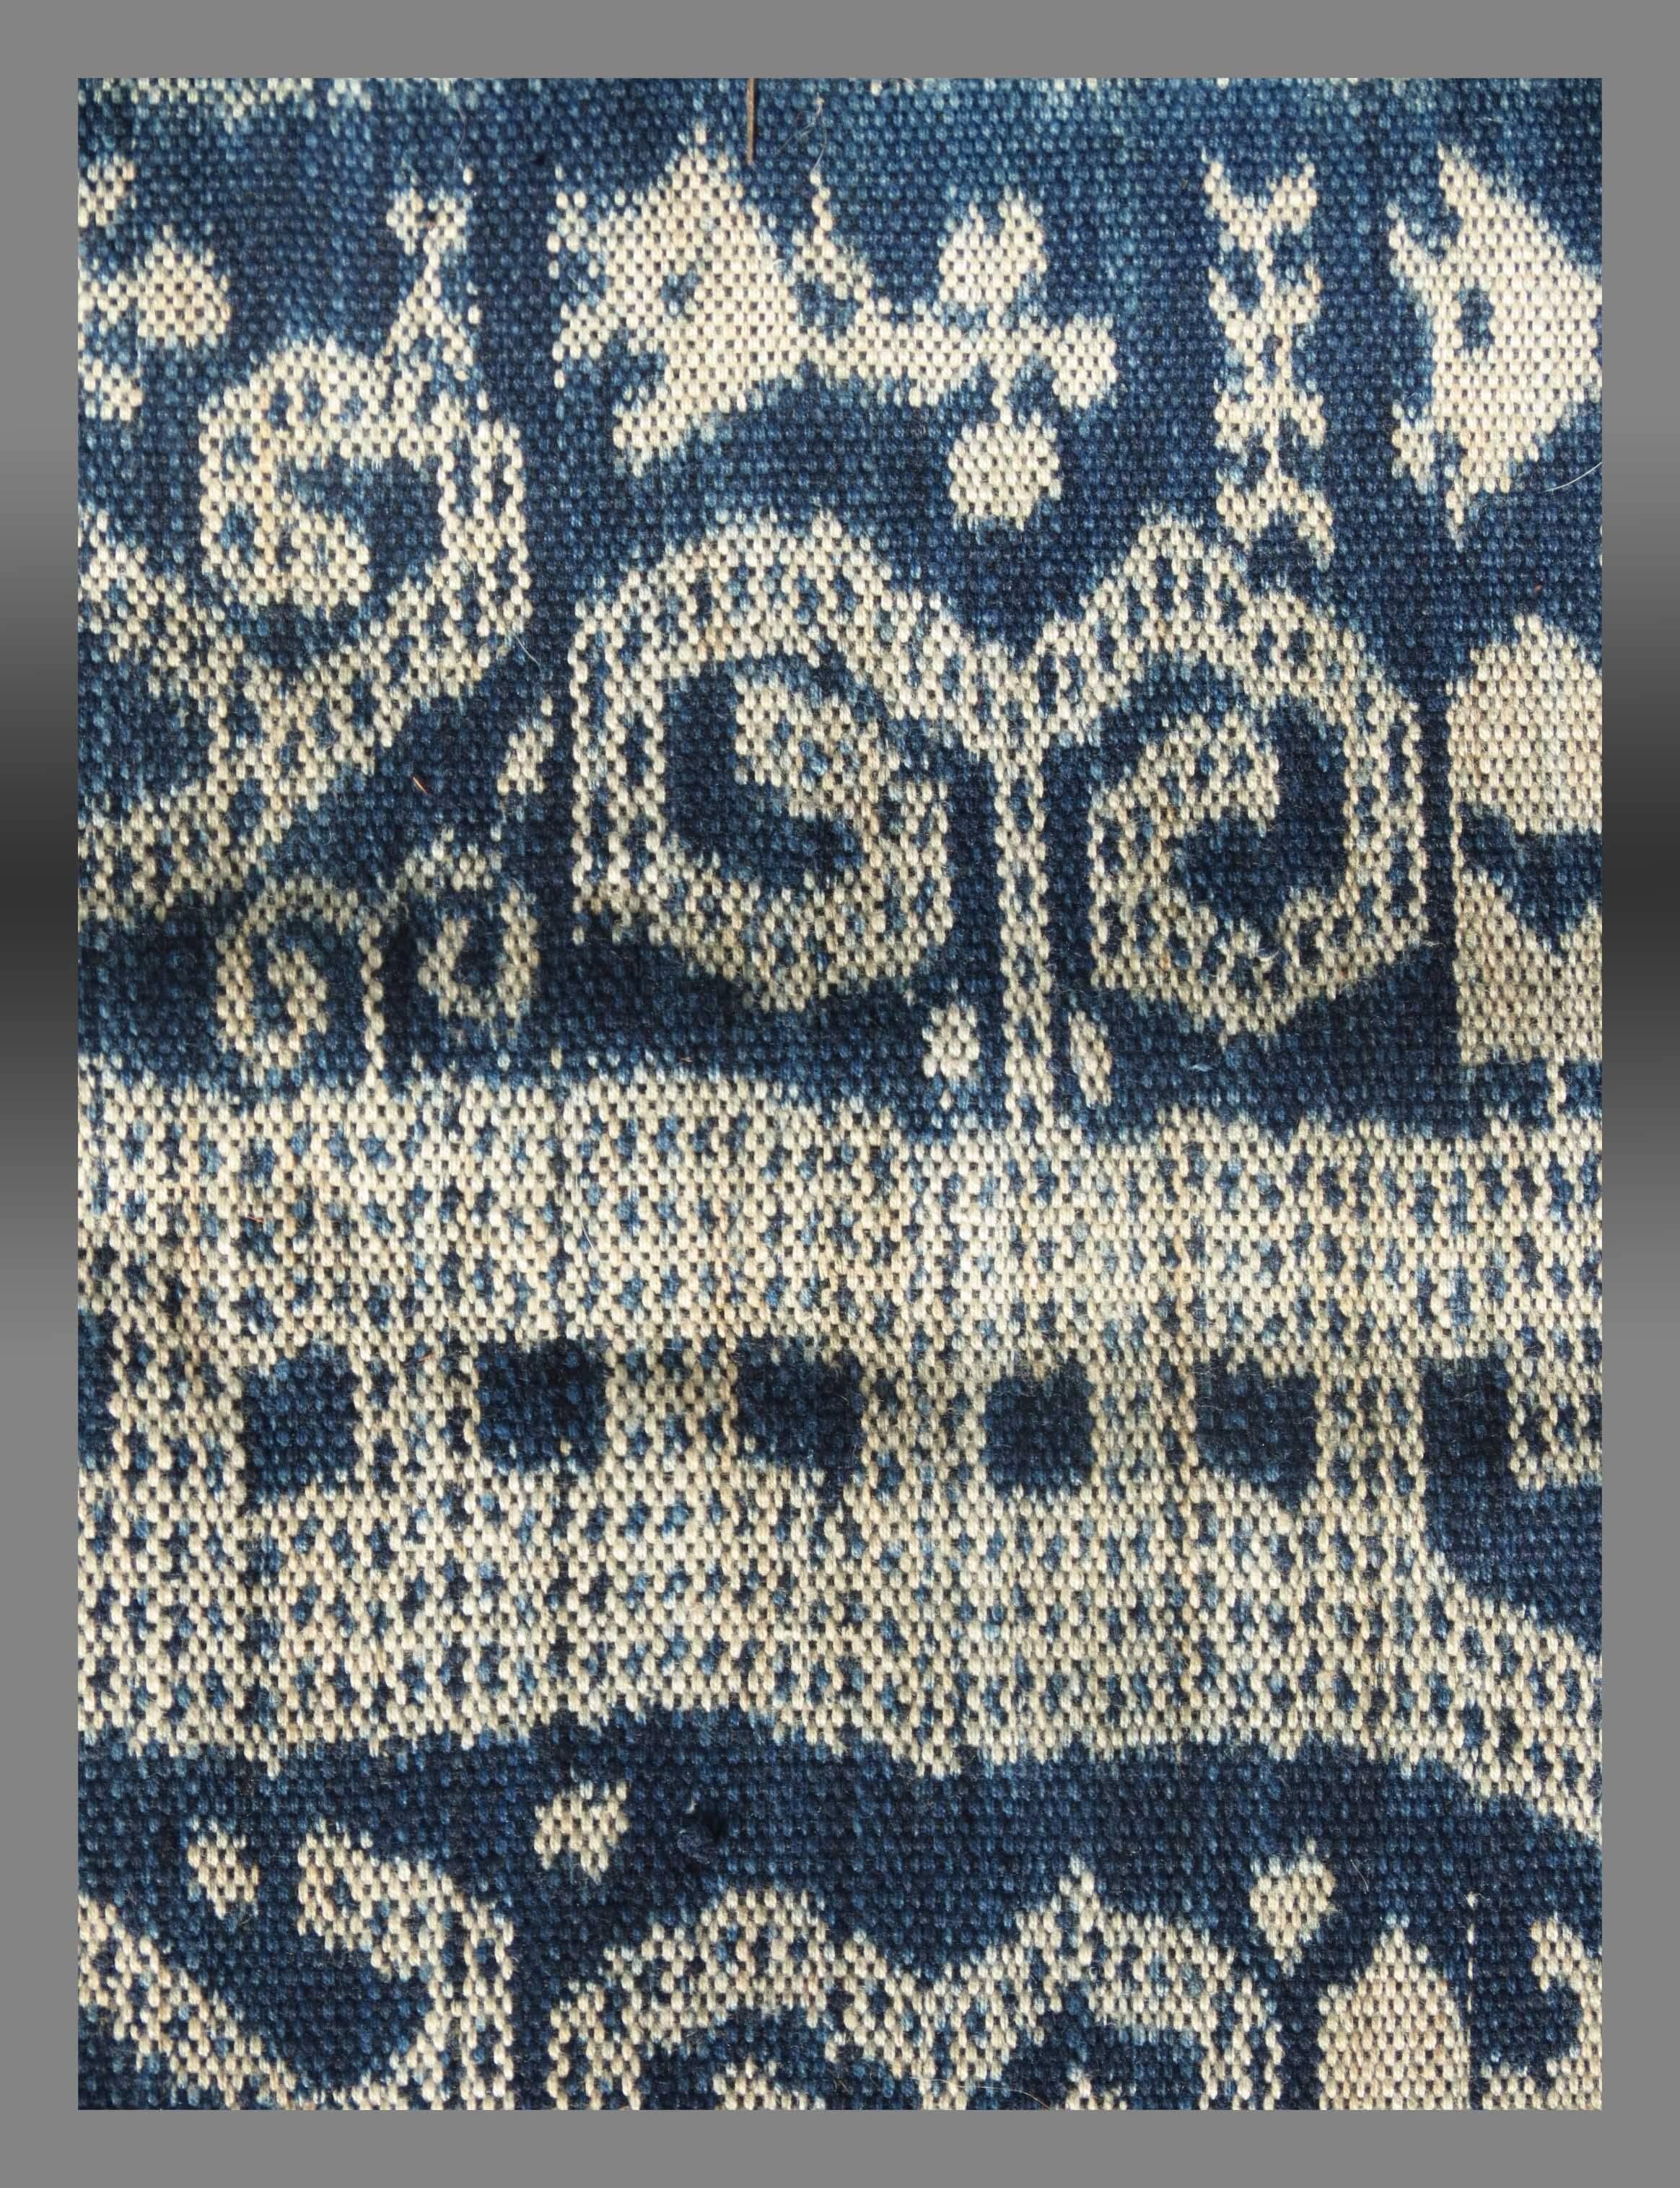 West Timor Tribal Cotton Ikat Textile, Decorative/Unusual, 1960s-1970s 1